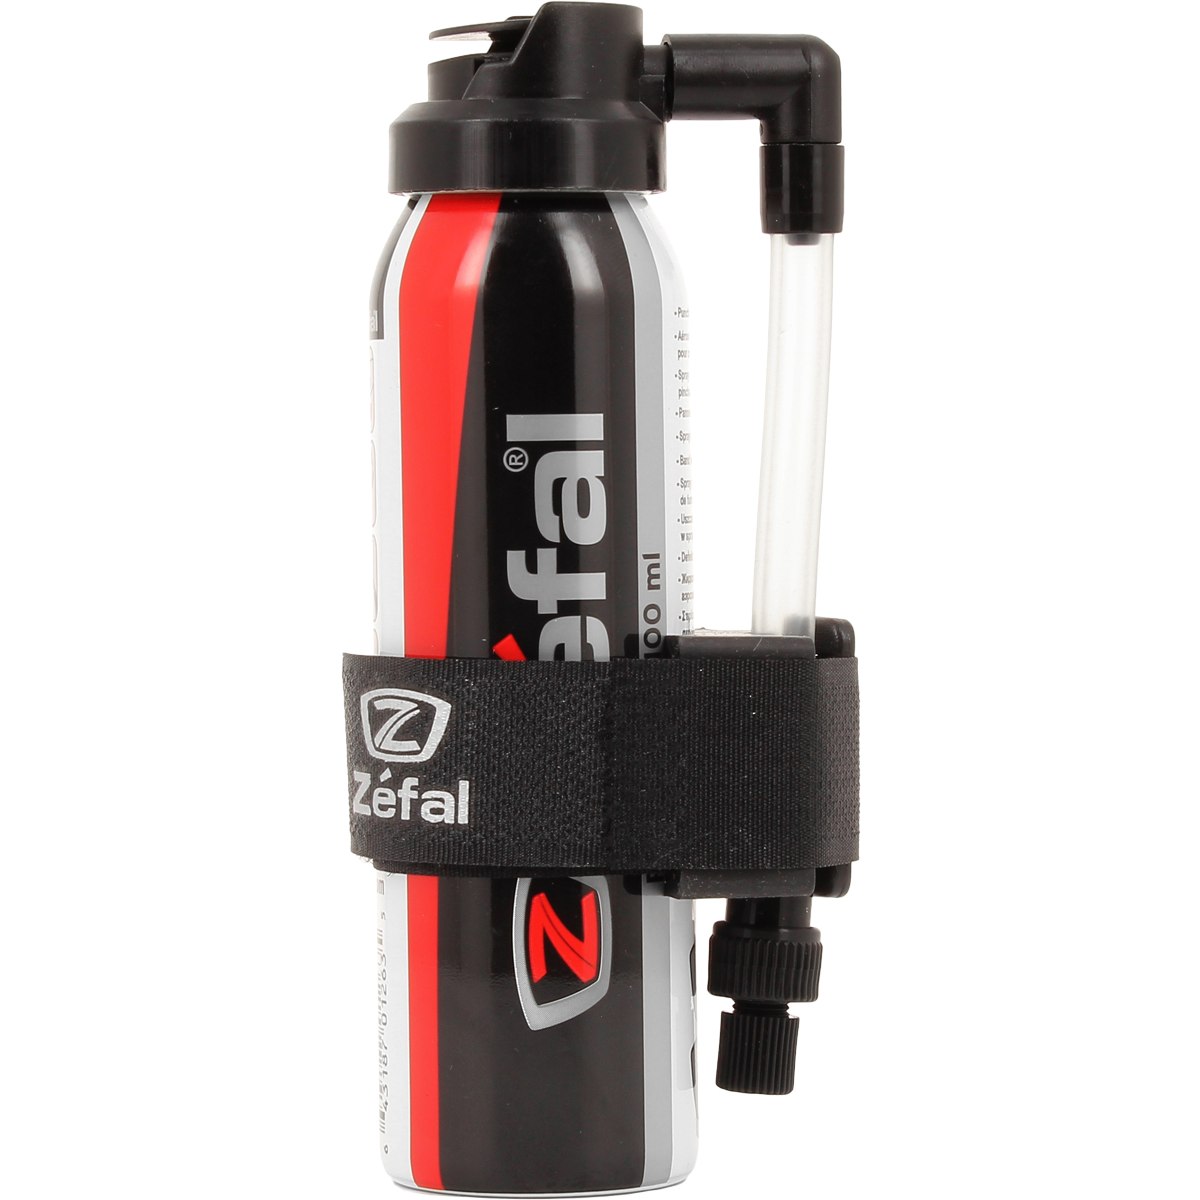 Productfoto van Zéfal Repair Spray 100ml + Doobad Mounting Clip